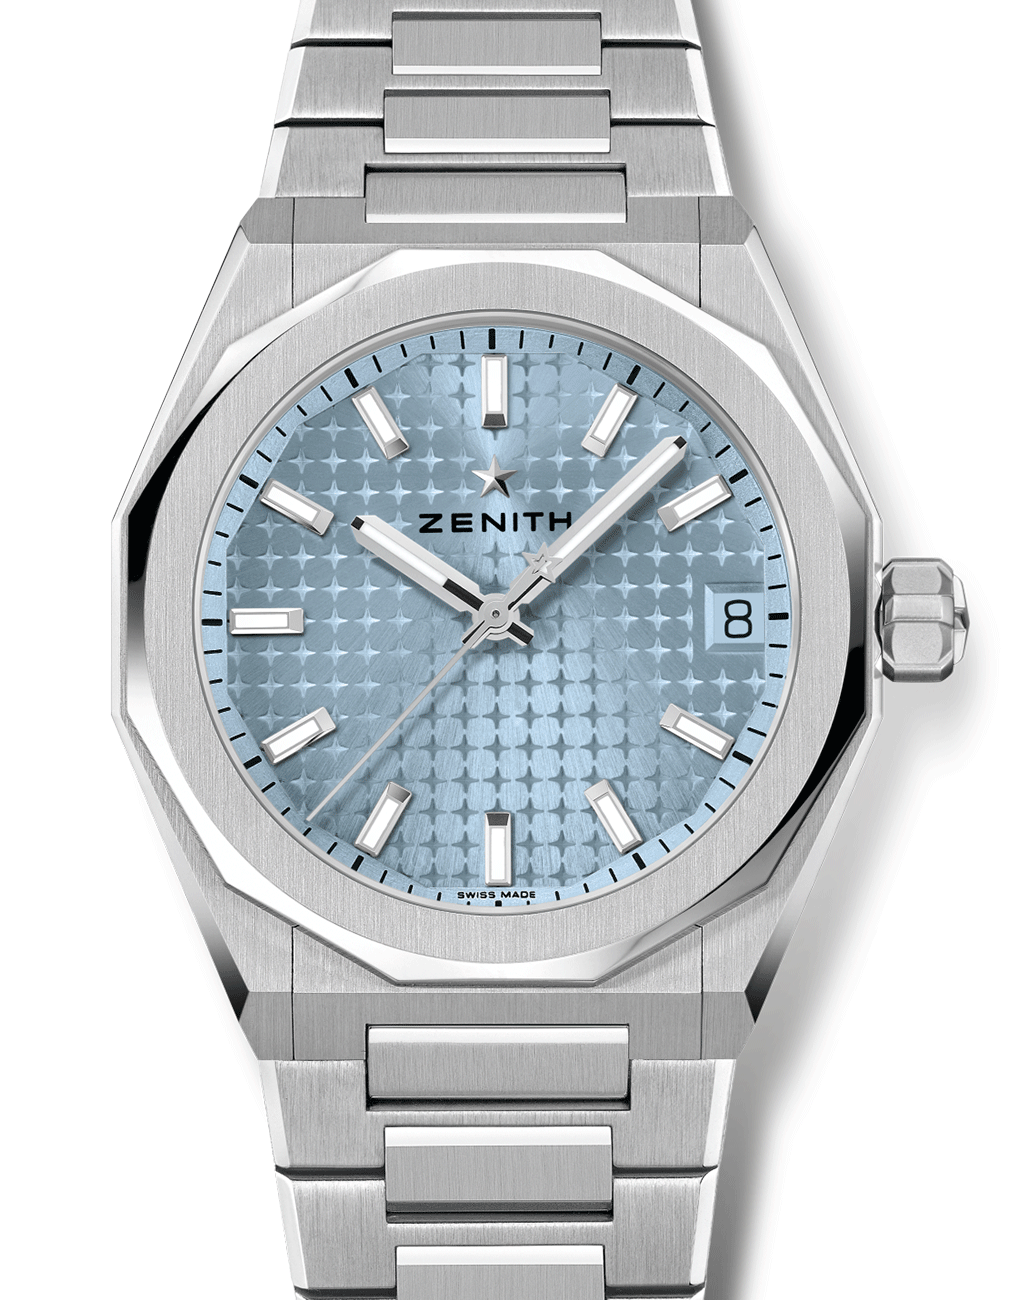 Zenith Debuts Defy Skyline 36mm Watches